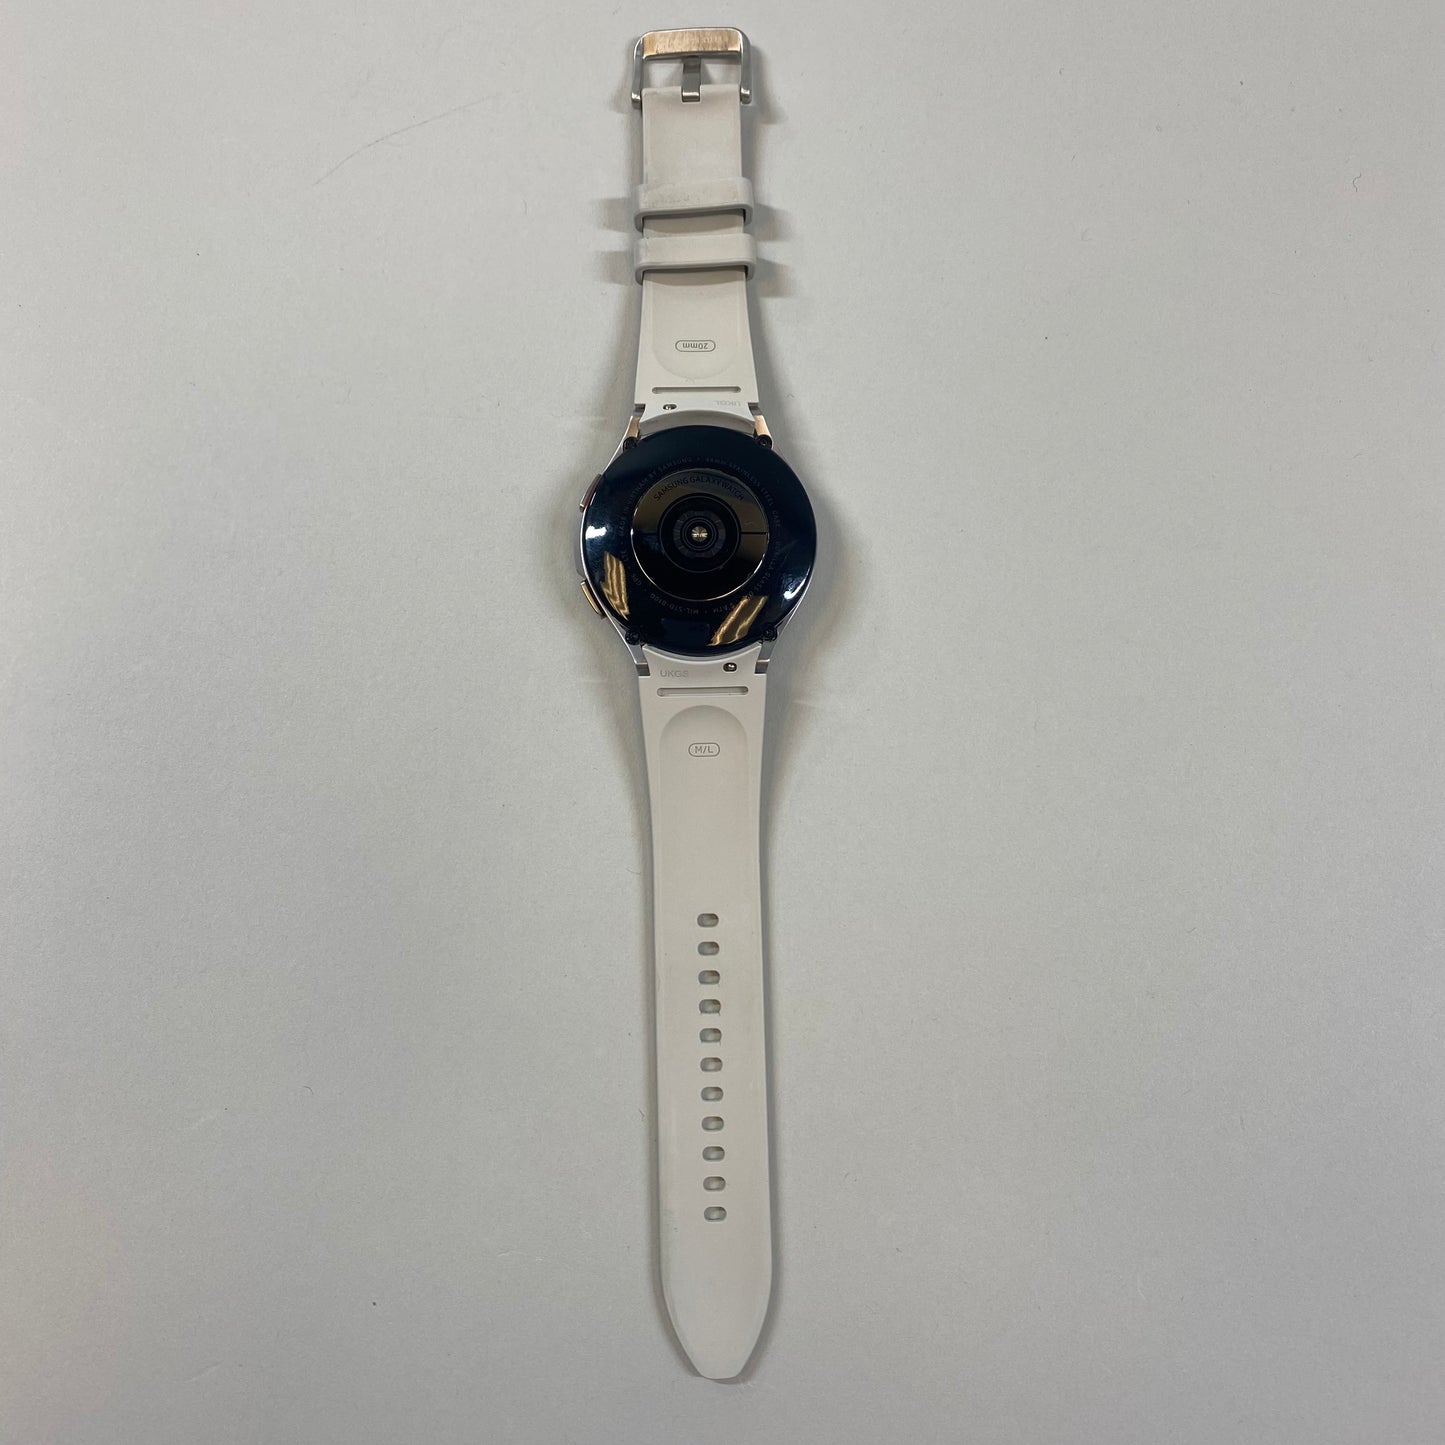 Factory Unlocked Samsung Galaxy Watch4 Classic 46mm Stainless Steel Smartwatch